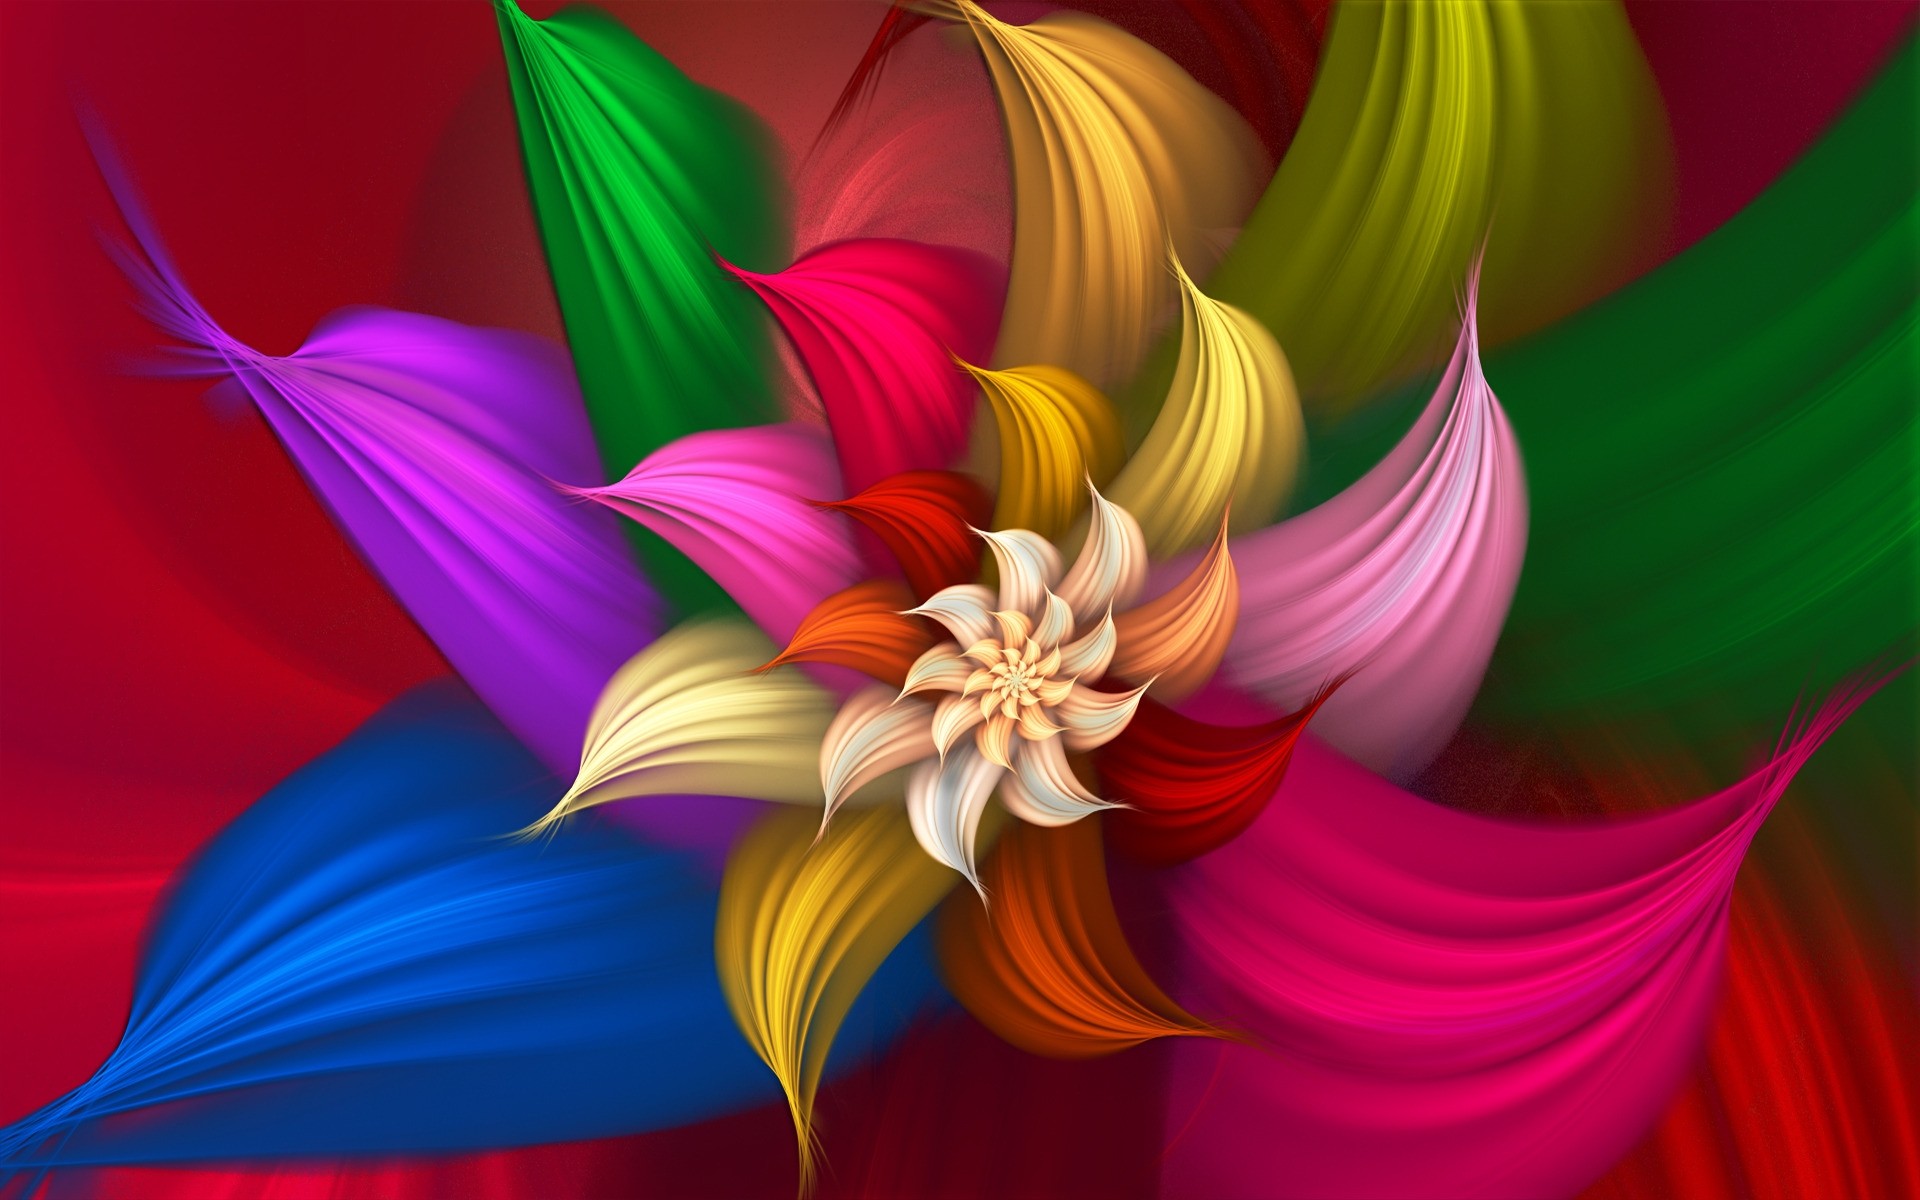 abstract color art decoration illustration design desktop bright graphic vector flower pattern